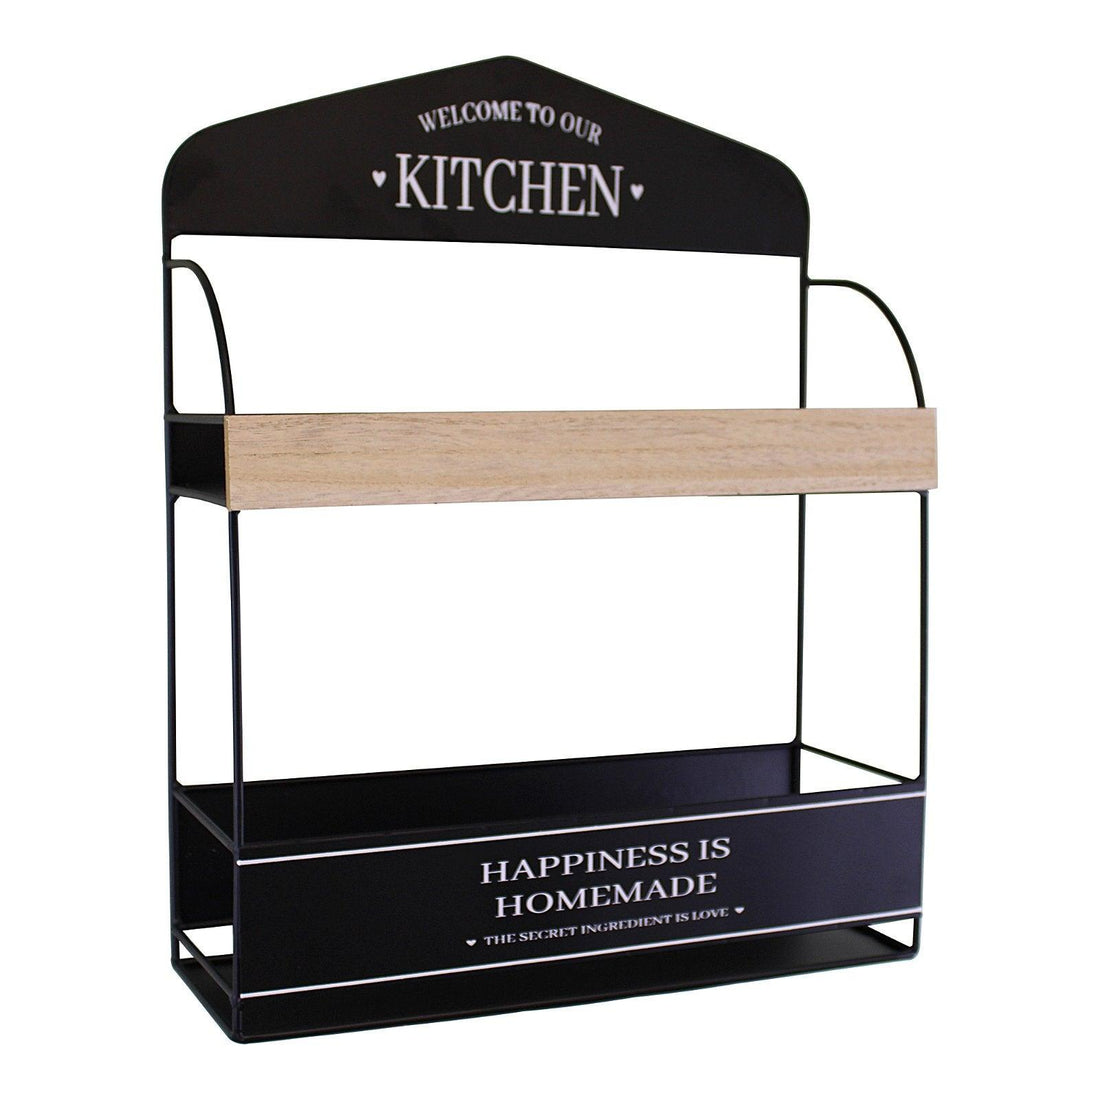 Decorative Wall Hanging Kitchen Shelving Unit - £52.99 - Kitchen Storage 